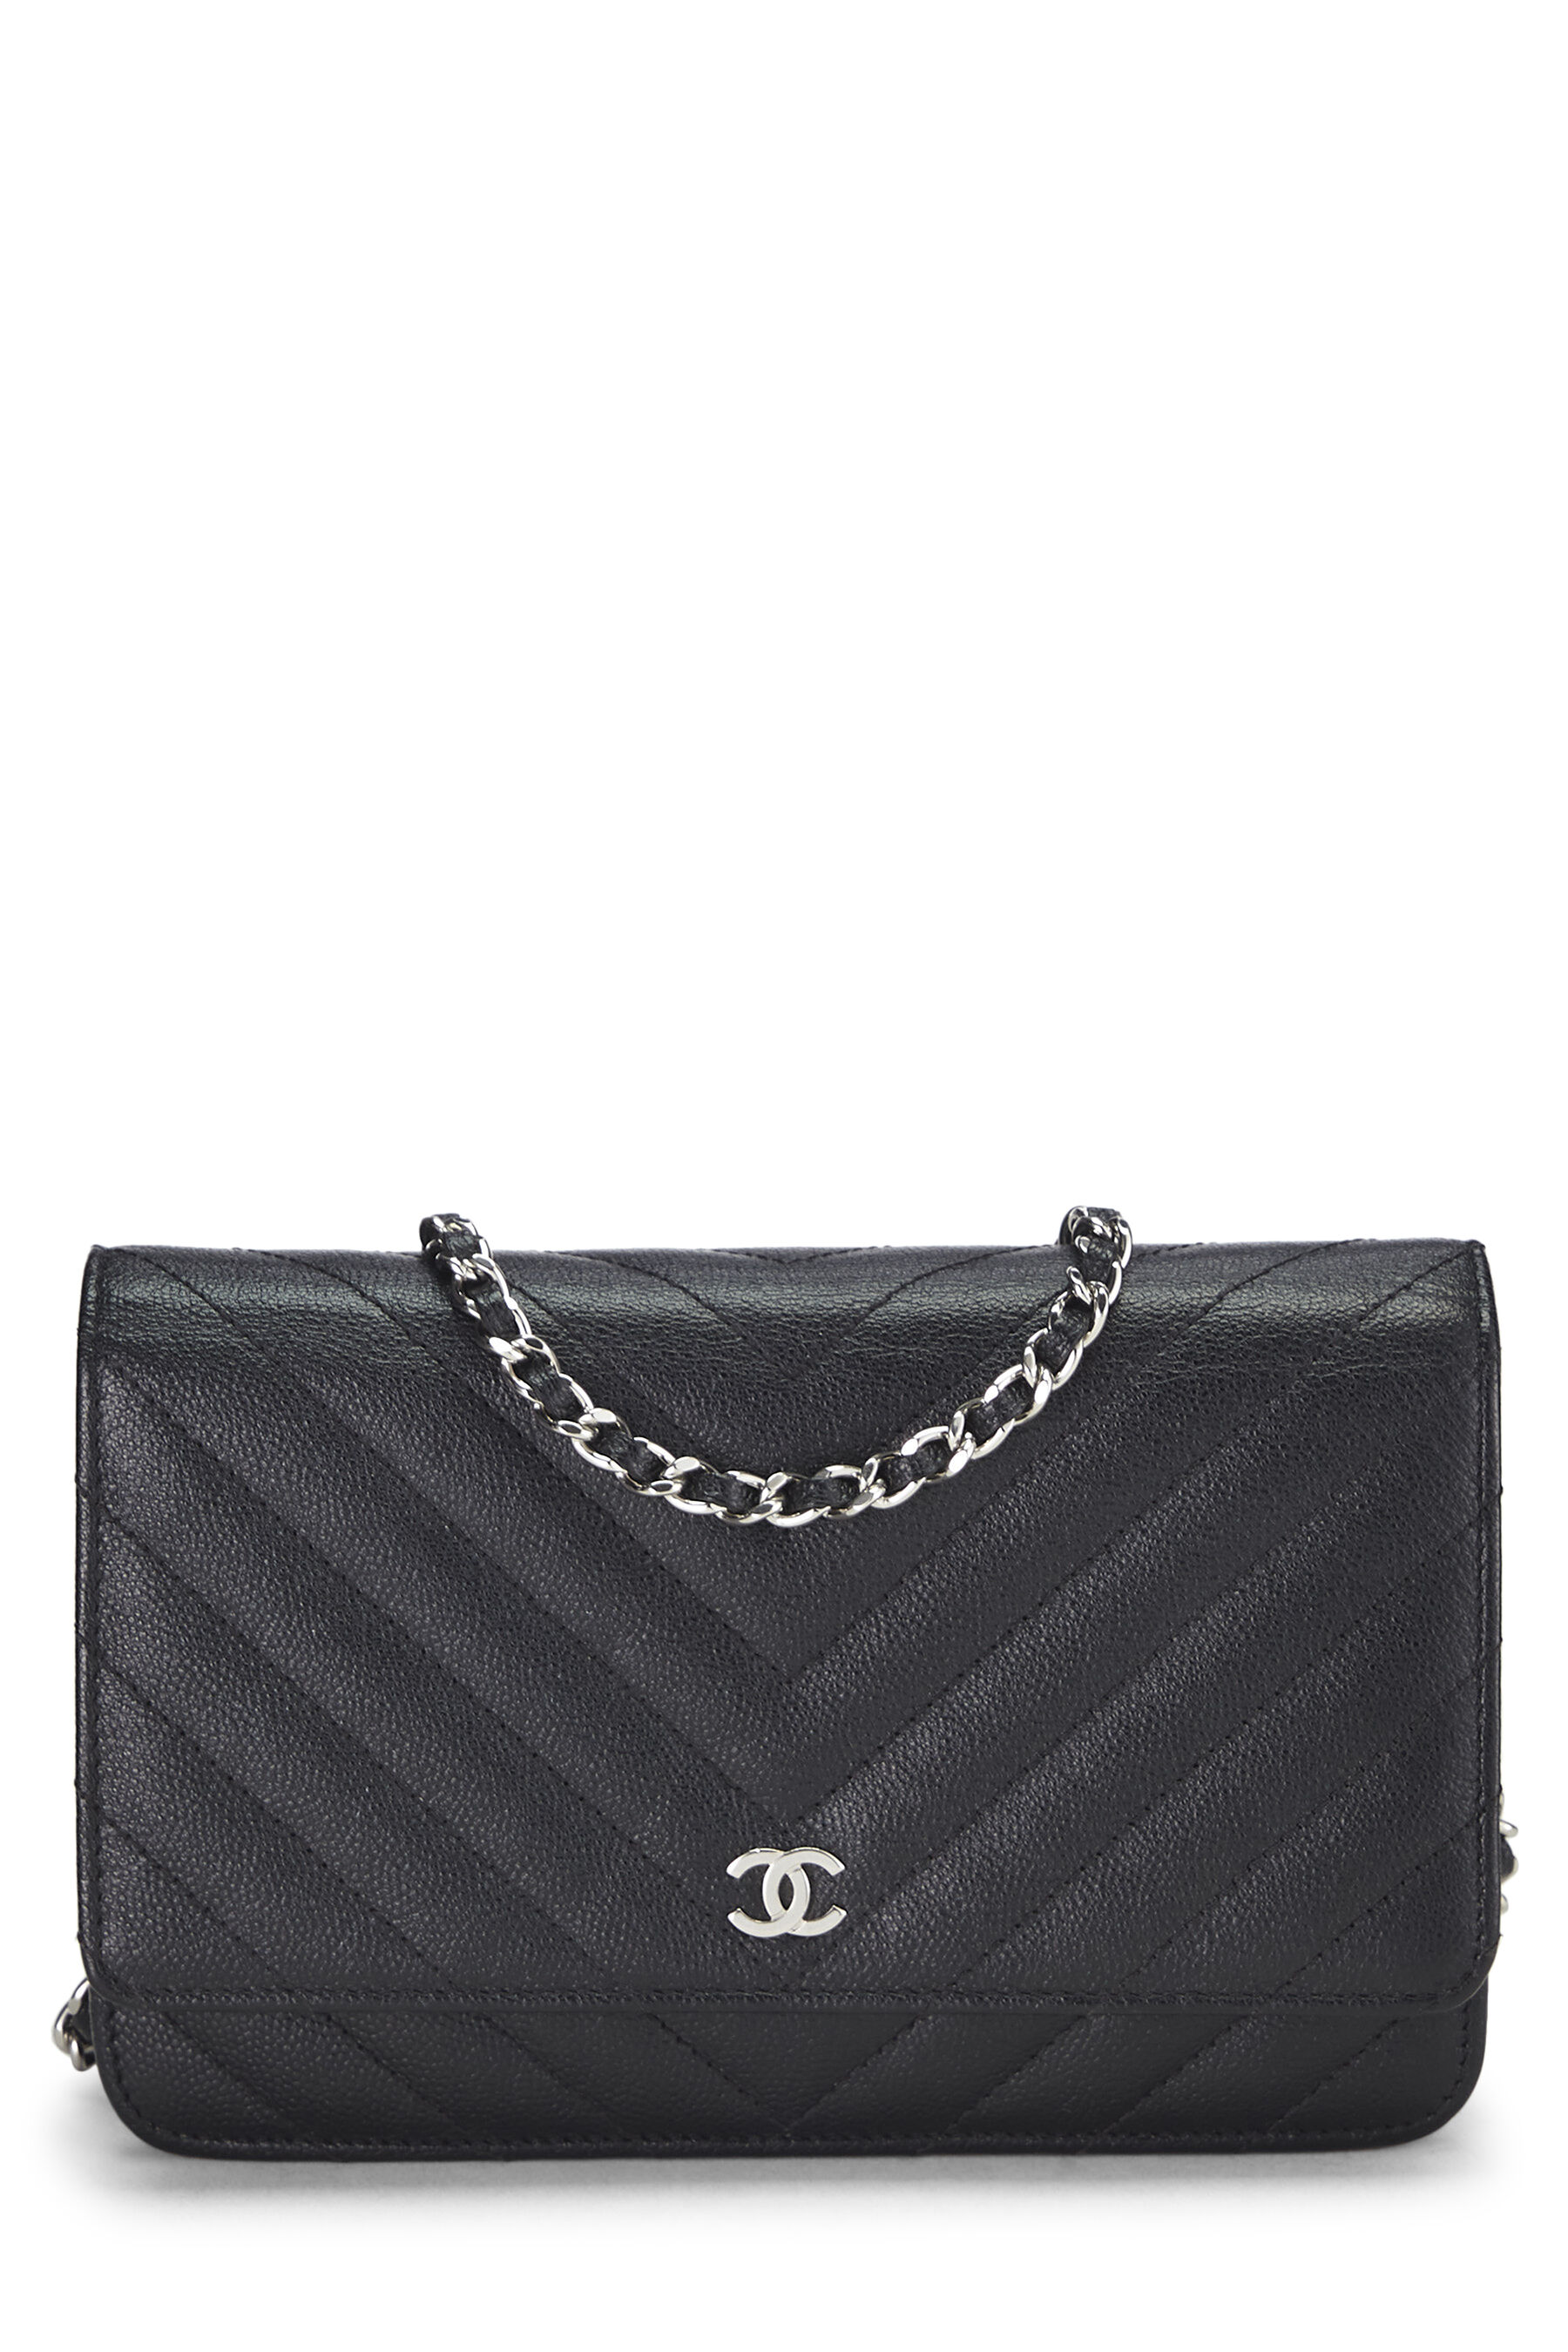 Chanel Black Caviar Chevron Wallet On Chain Silver Hardware, 2017